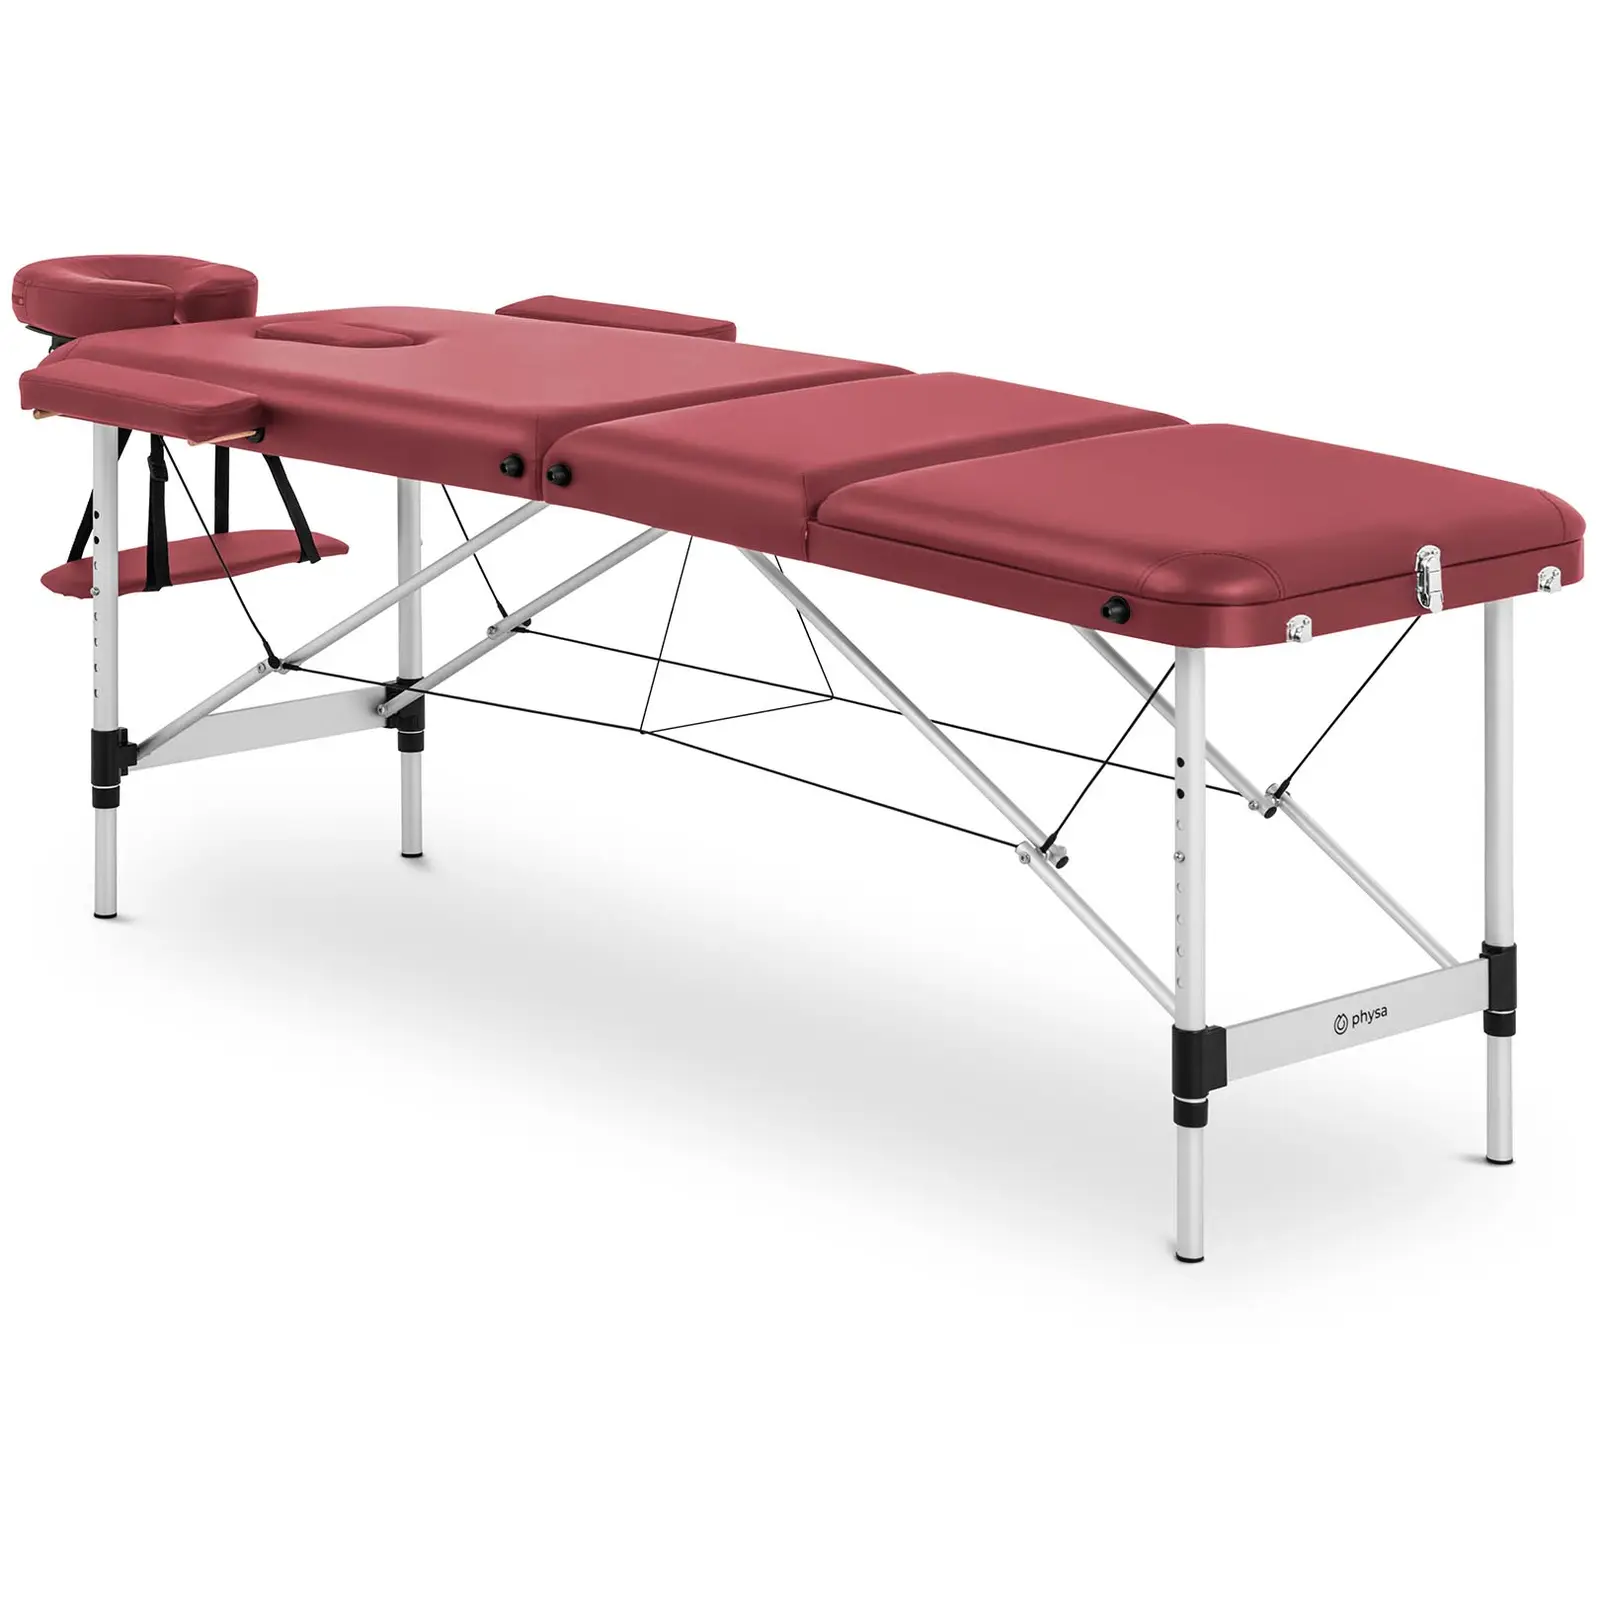 Folding Massage Table - 185 x 60 x 60-81 cm - 180 kg - Red